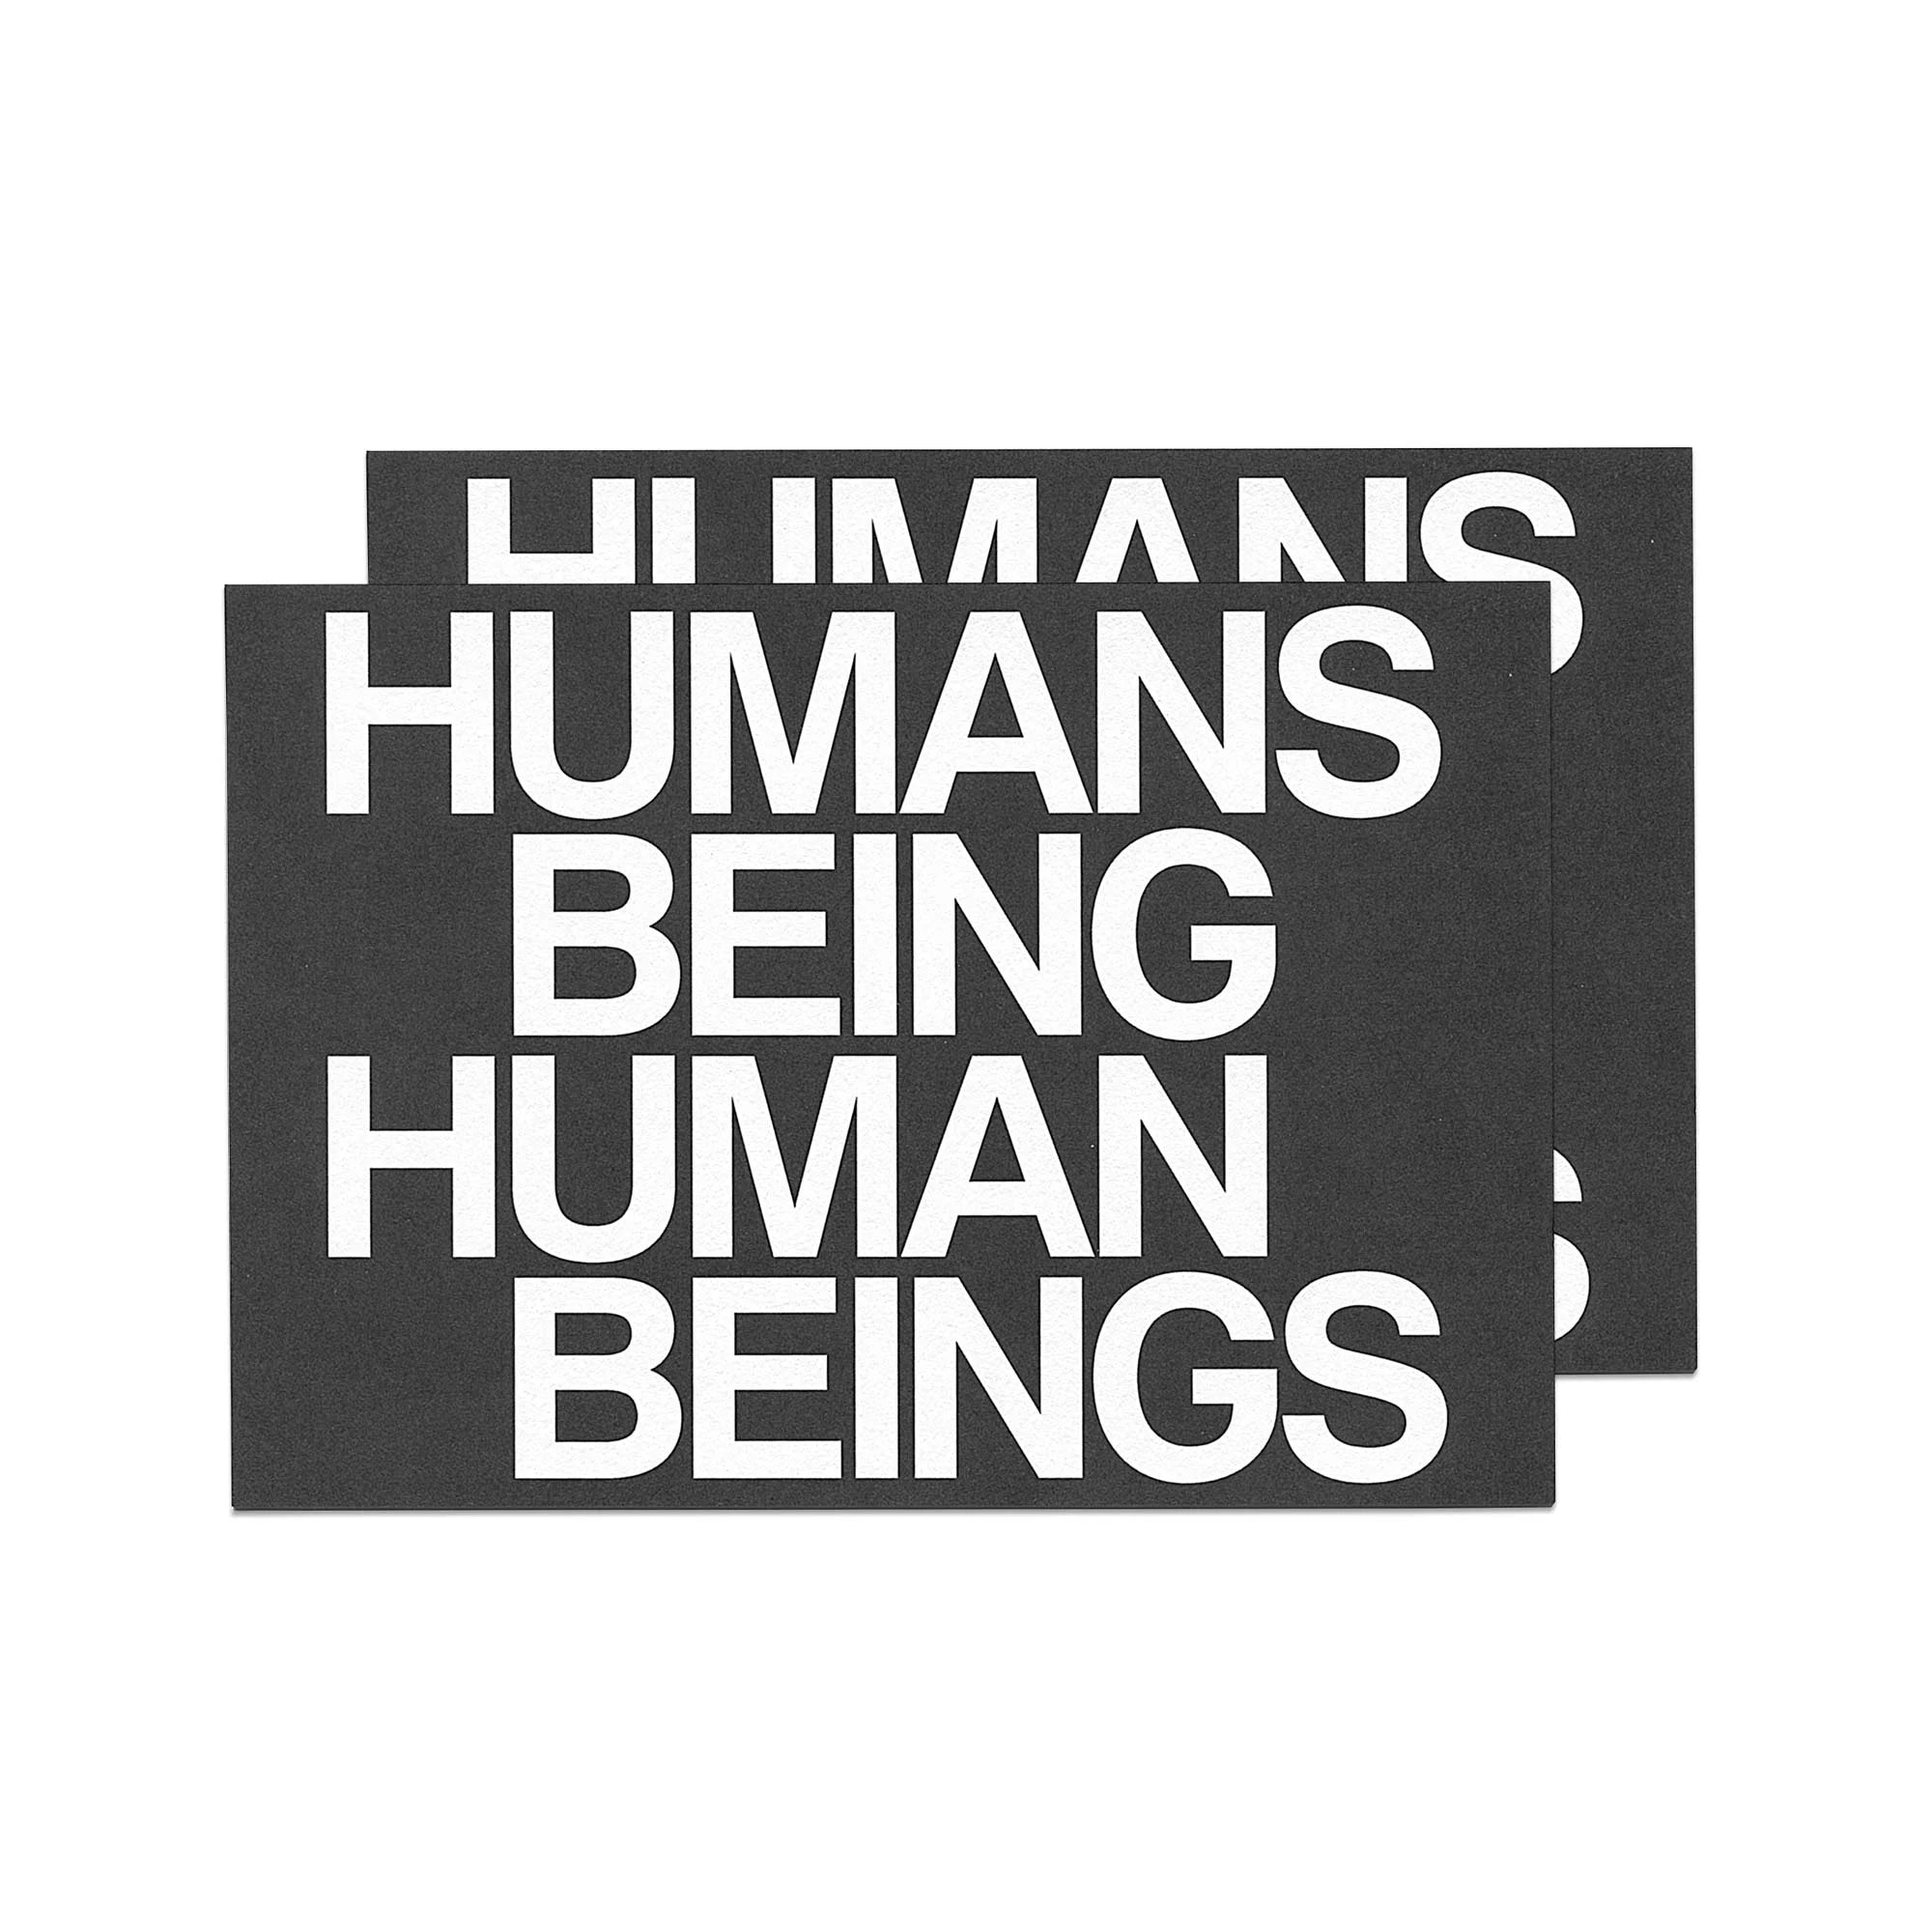 Humans Being Human Beings Poster - Zak Jensen